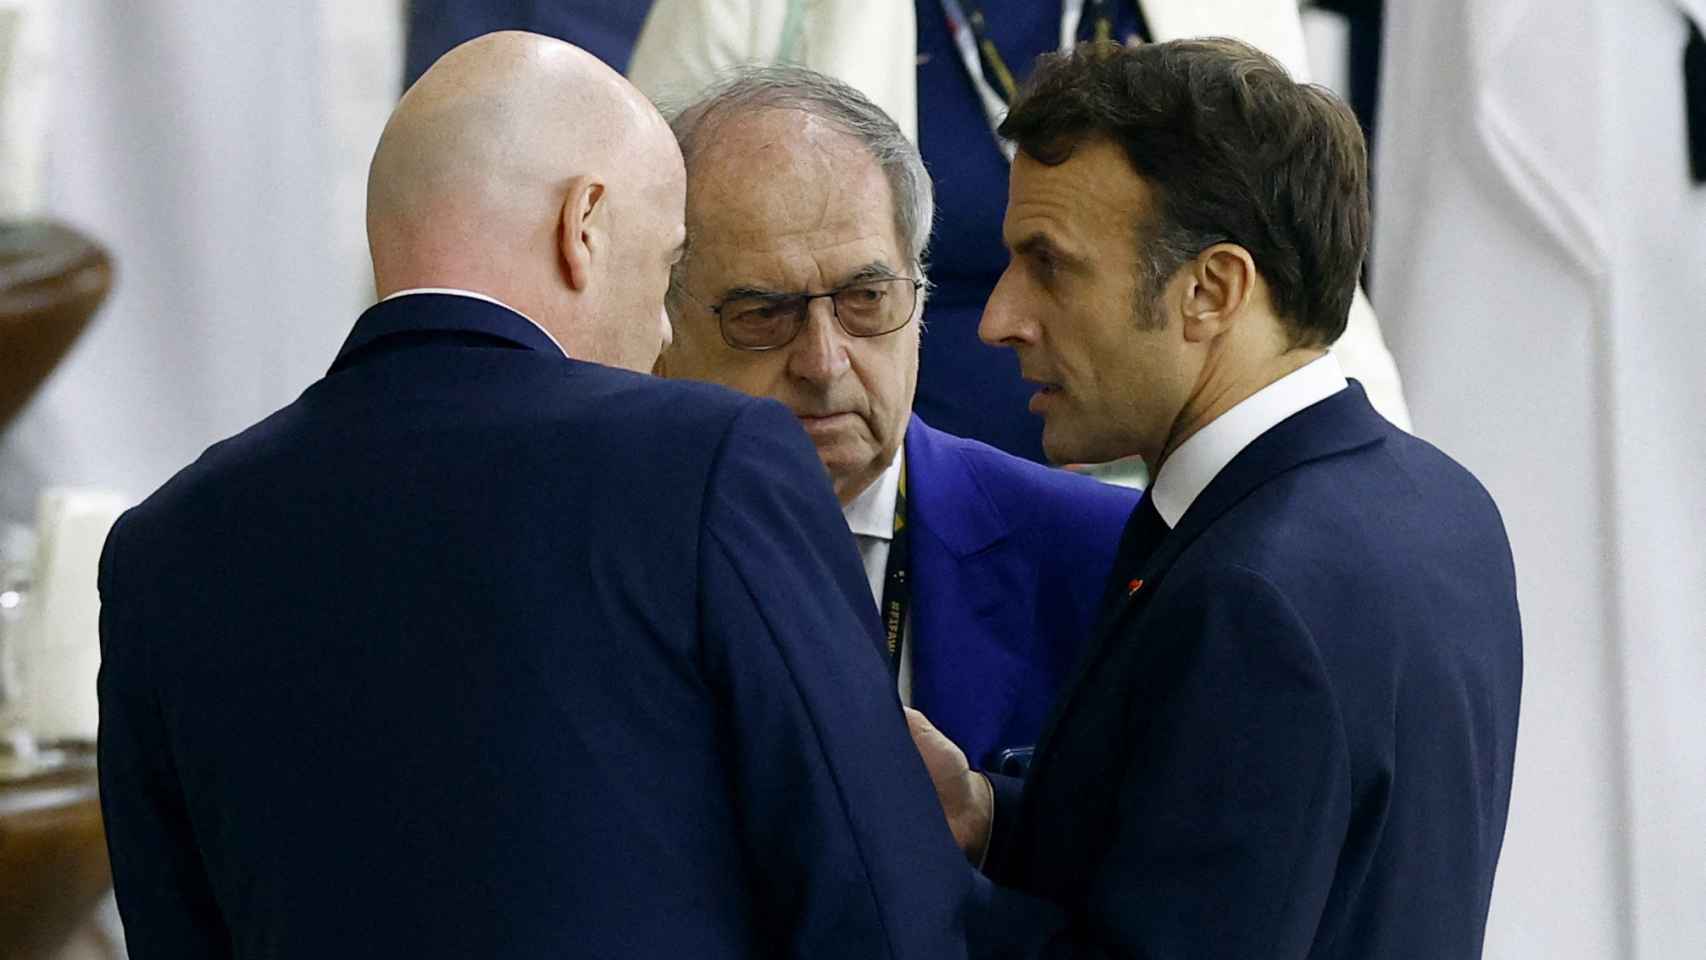 Noël Le Graet, junto a Gianni Infantino y Emmanuel Macron en el Mundial de Qatar 2022